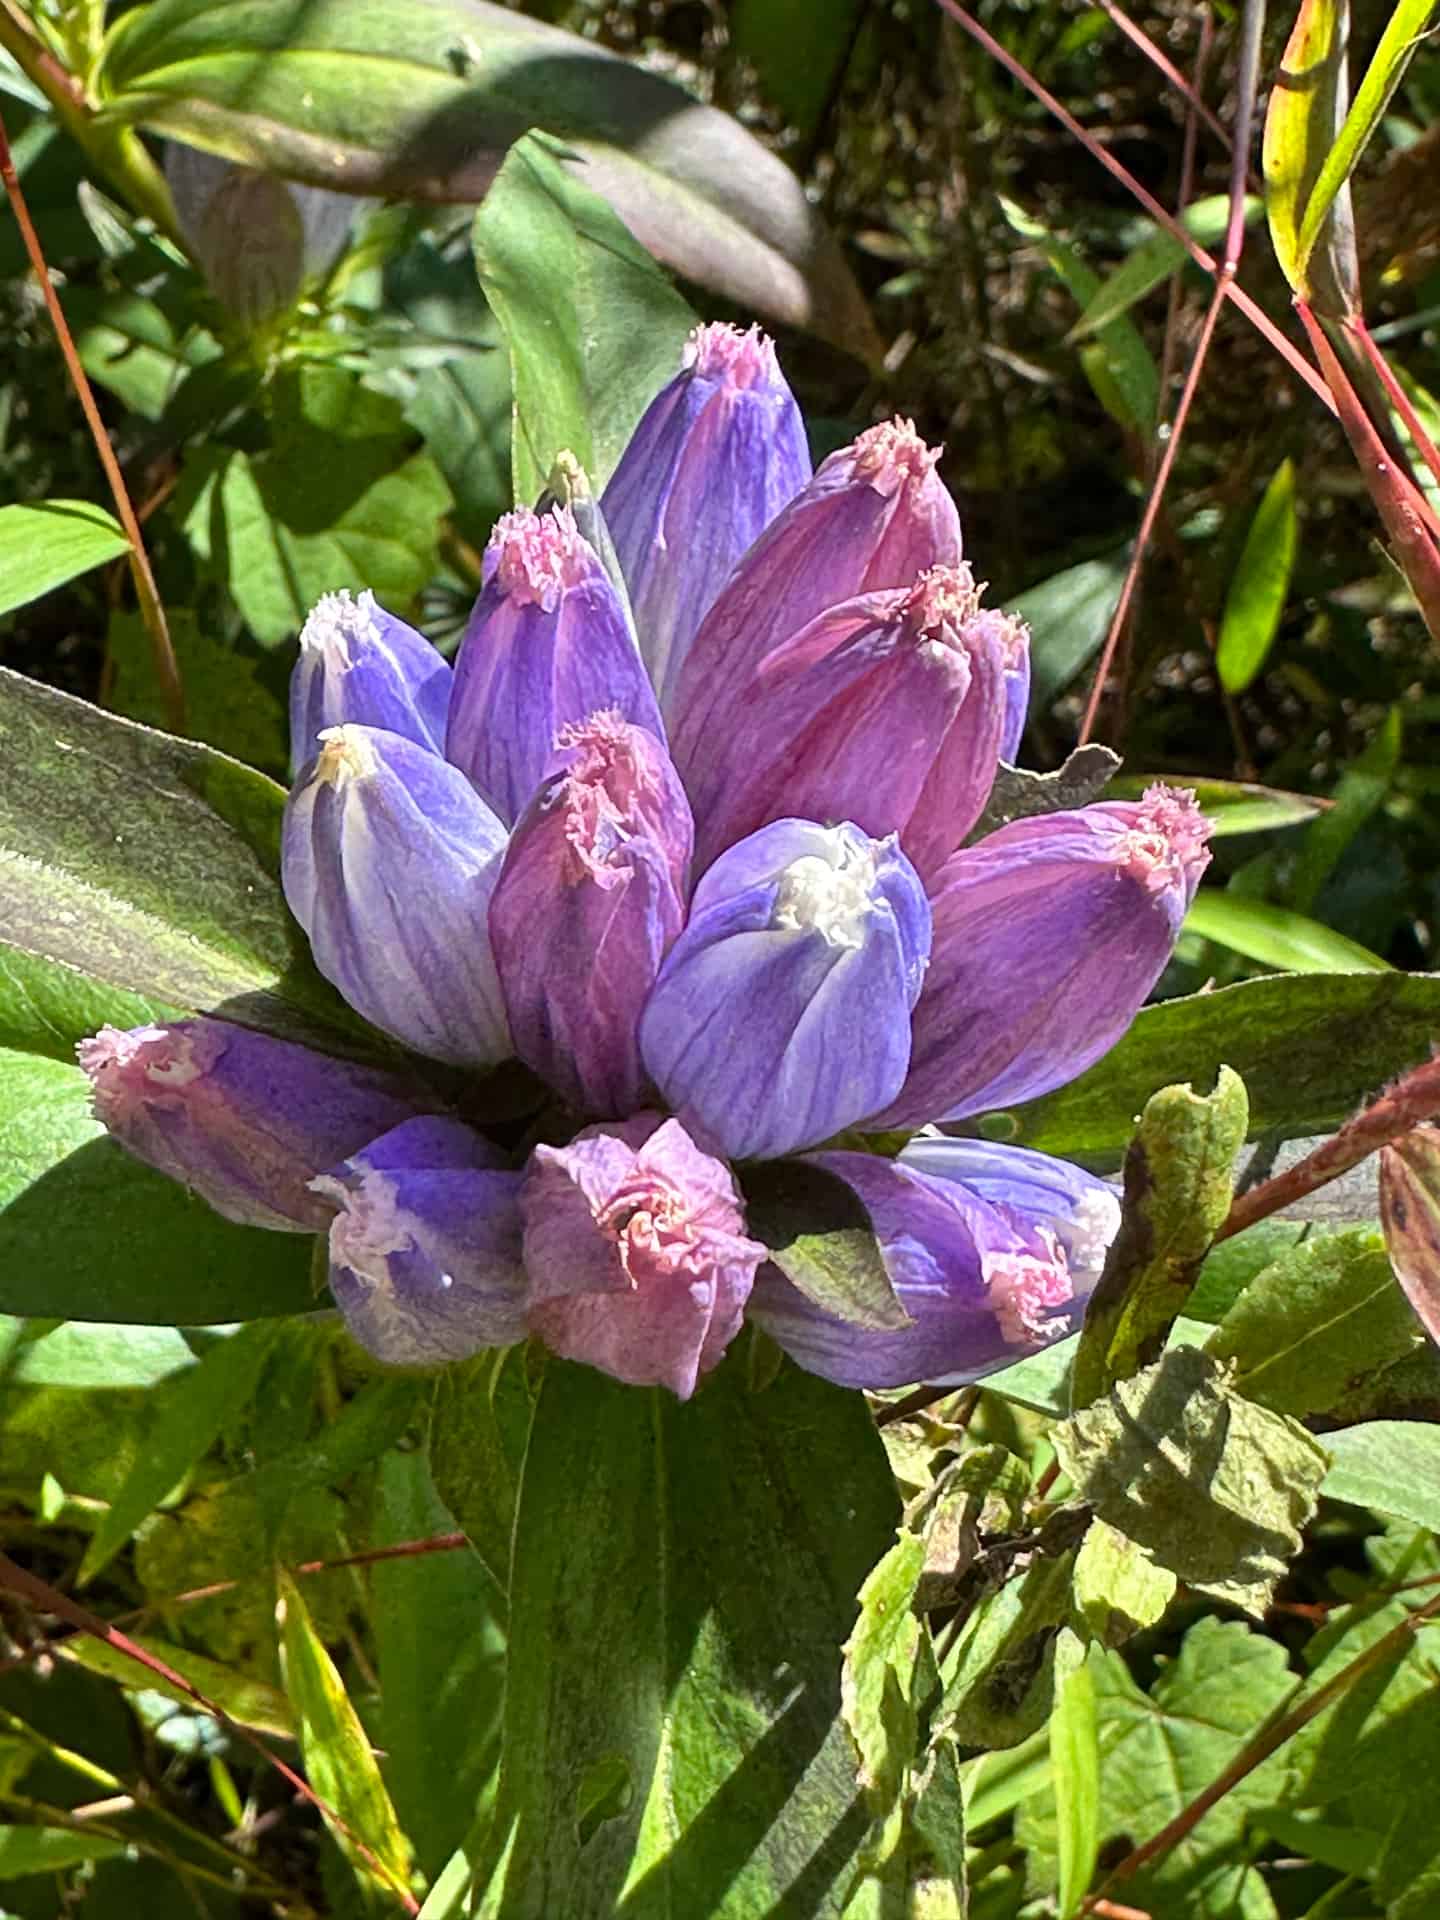 Bottle gentian flowers showing a purple color